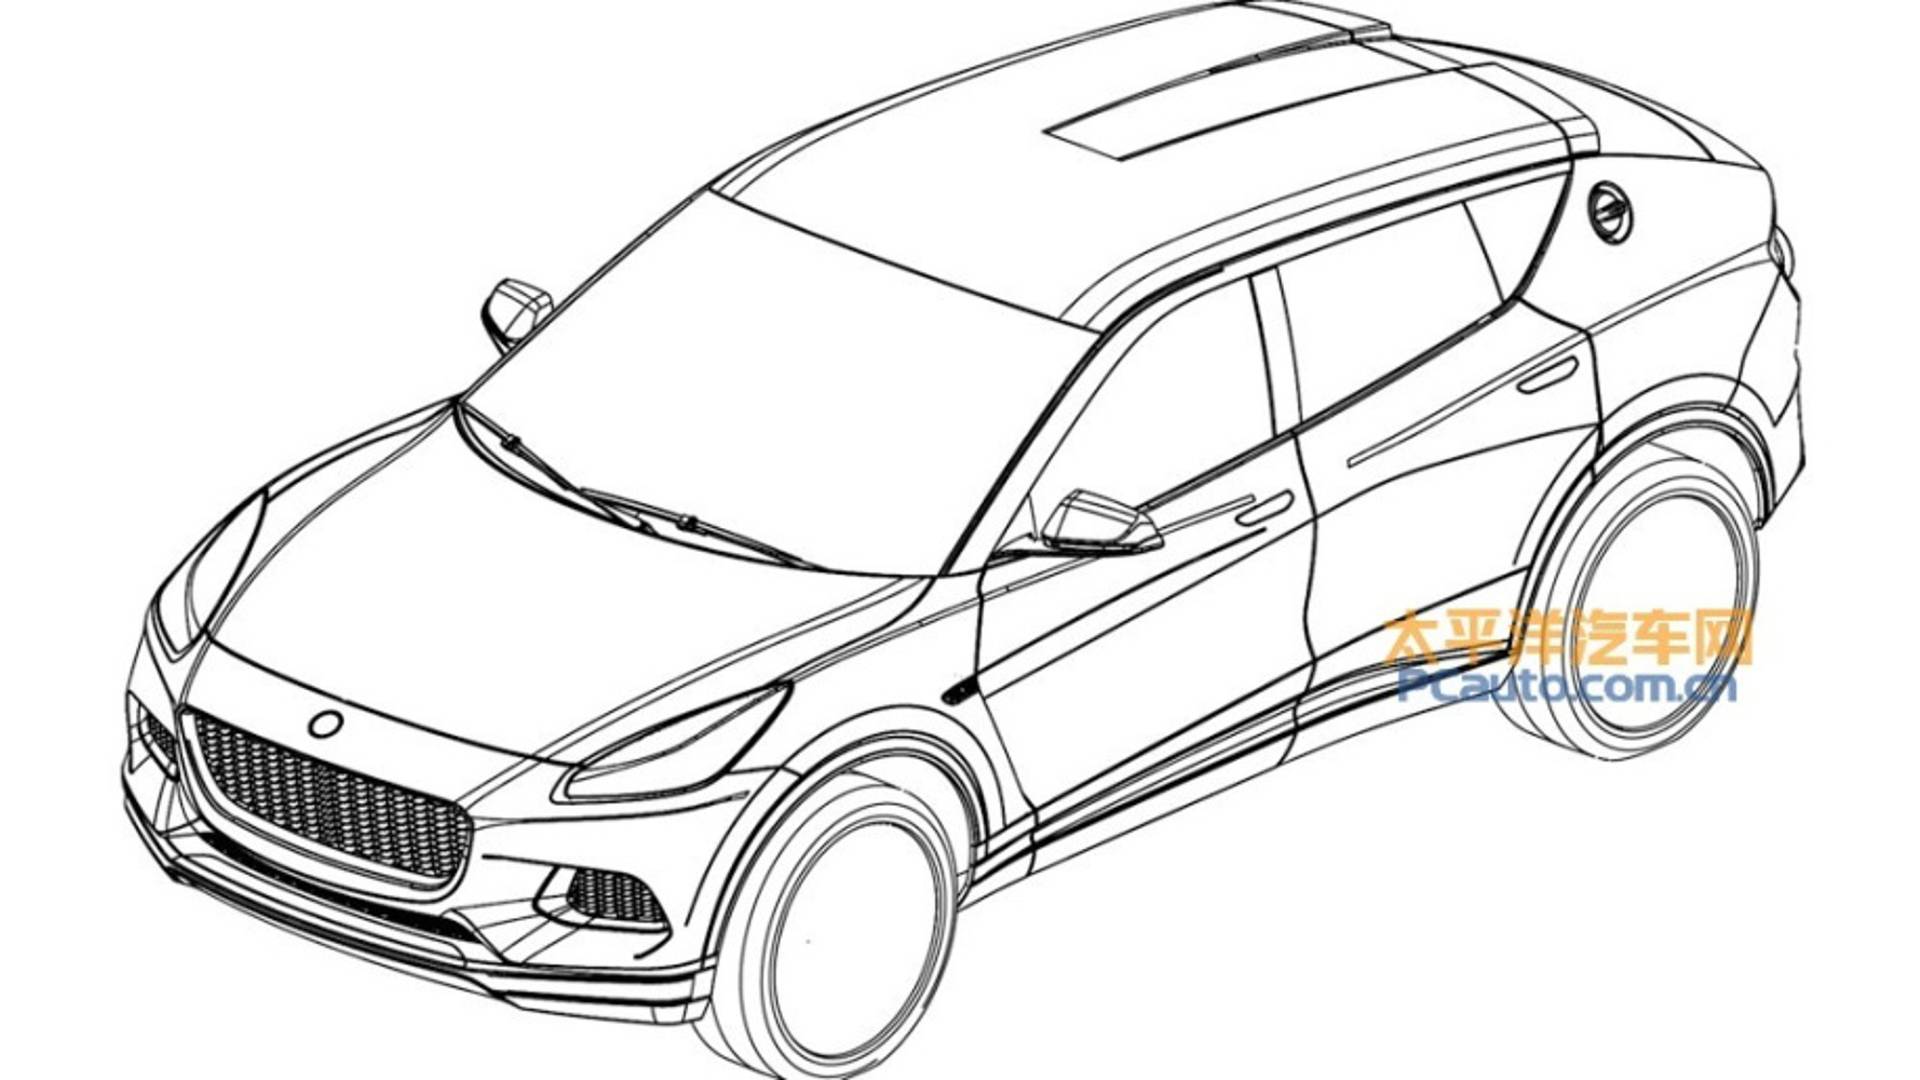 Lotus SUV design revealed via leaked patent images